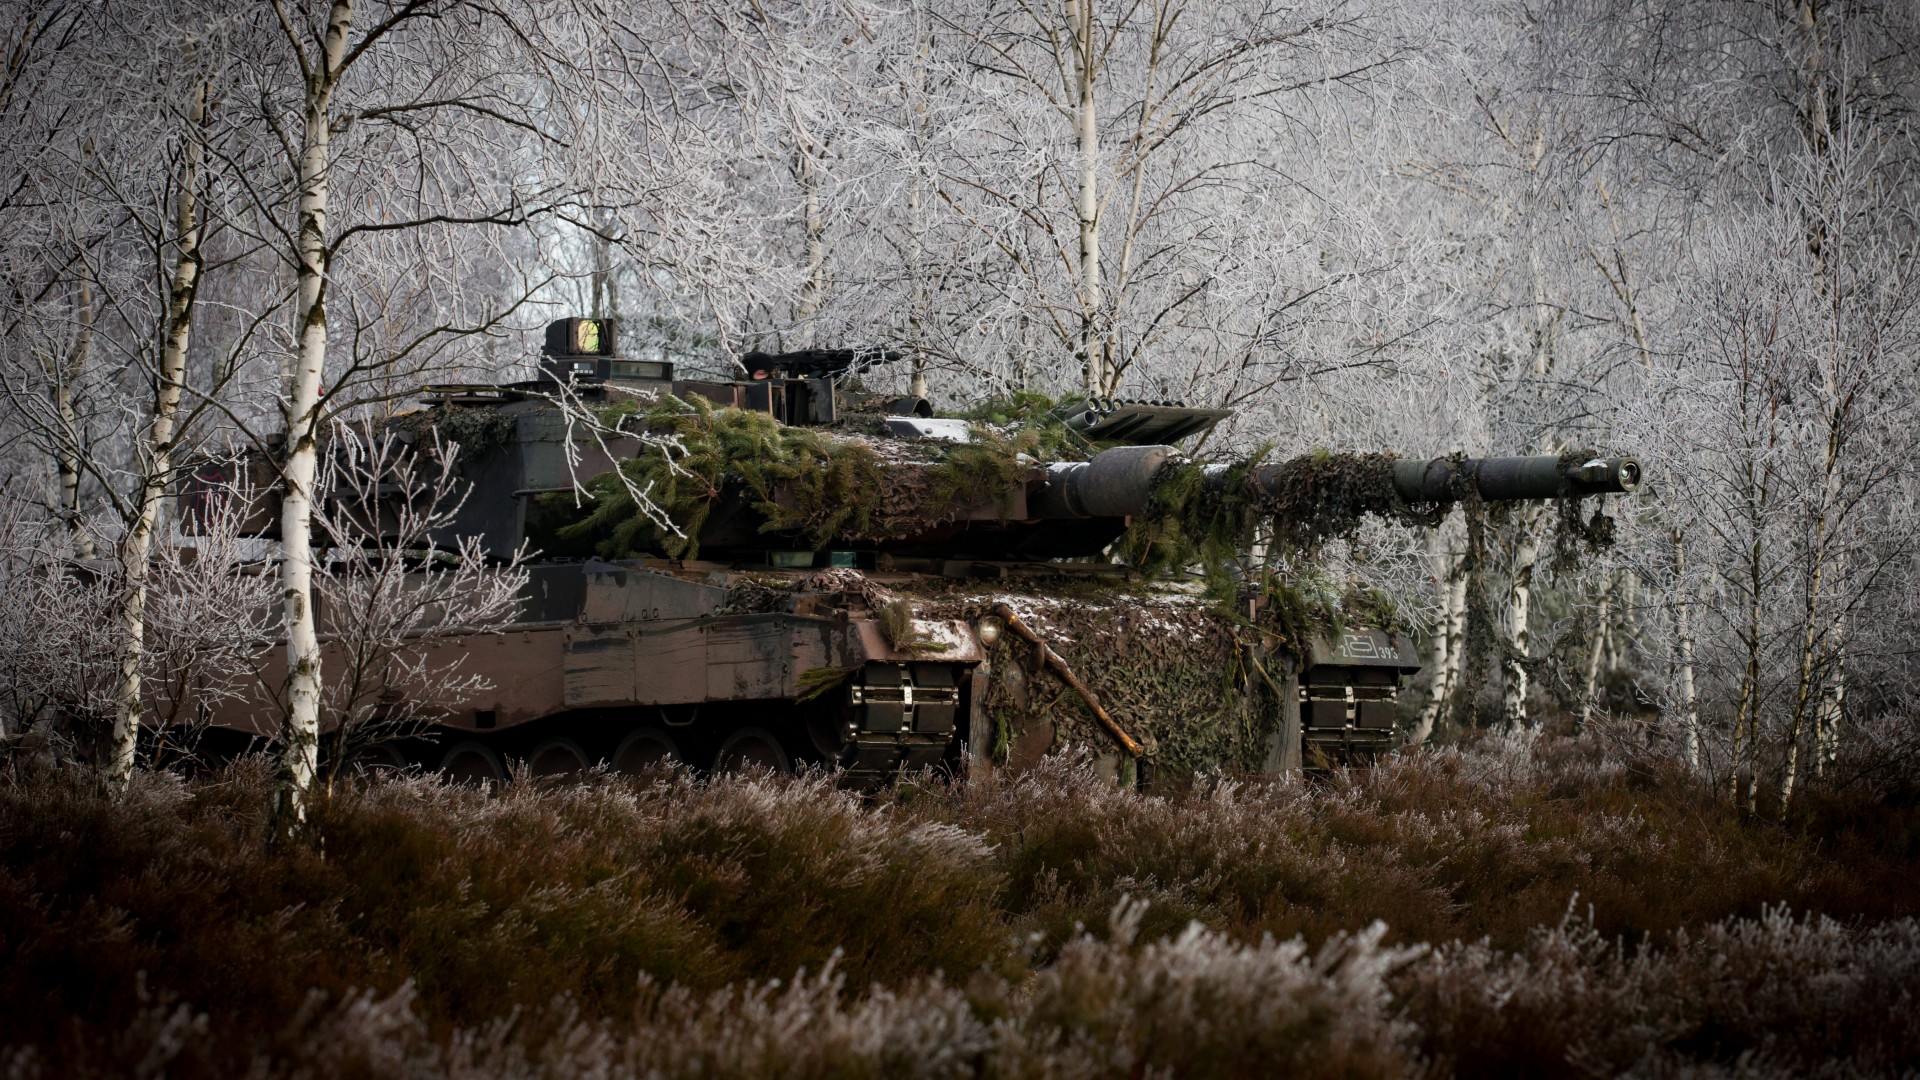 Леопард 2, танк, ОБТ, камуфляж, лес, Leopard 2, 2a6m, Can, MBT, tank, German, forest, Bundeswehr, camo, winter (horizontal)